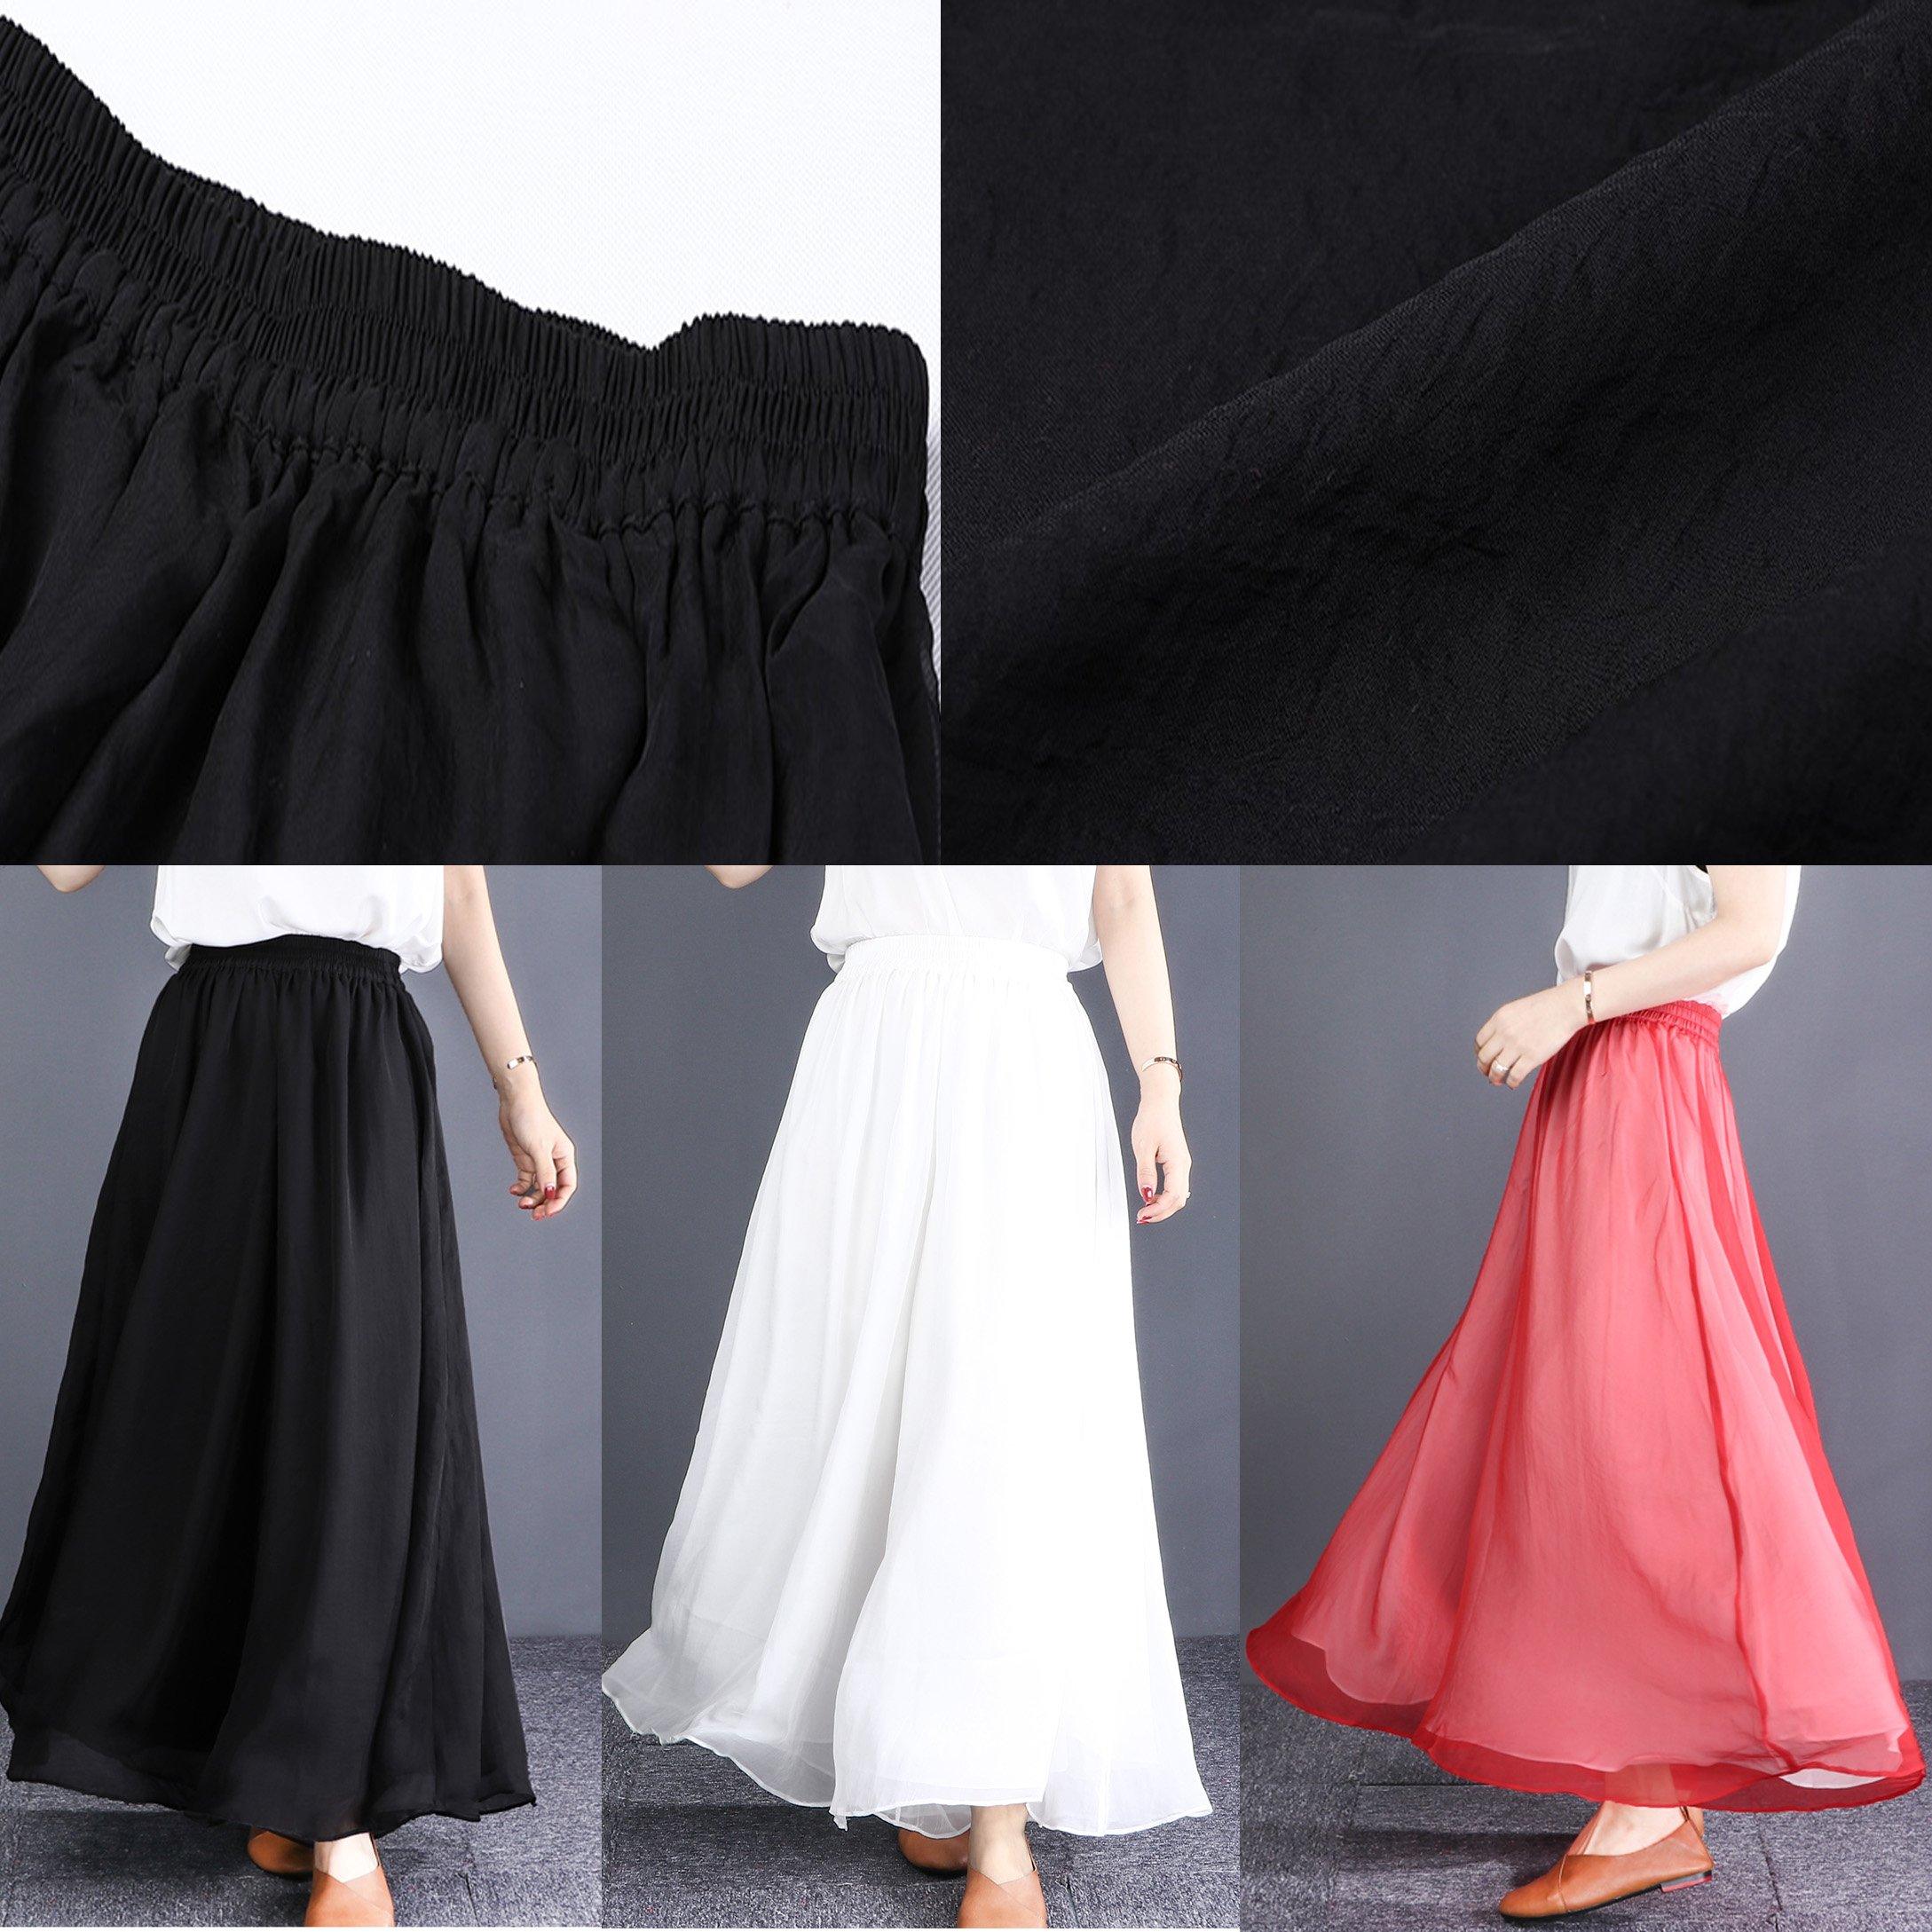 French elastic waist chiffon clothes For Women plus size white wide leg pants - Omychic